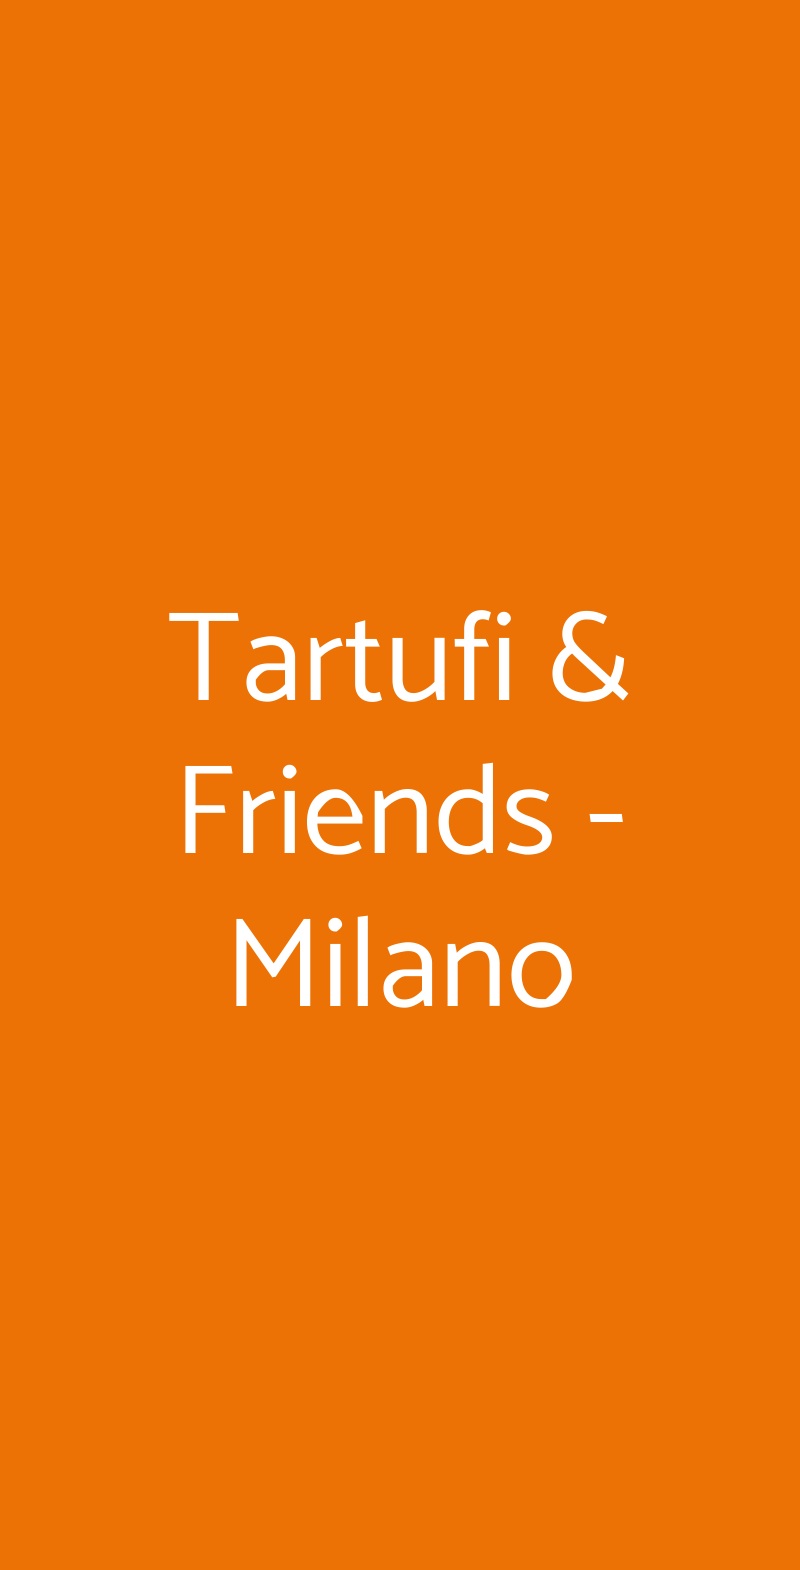 Tartufi & Friends Milano menù 1 pagina